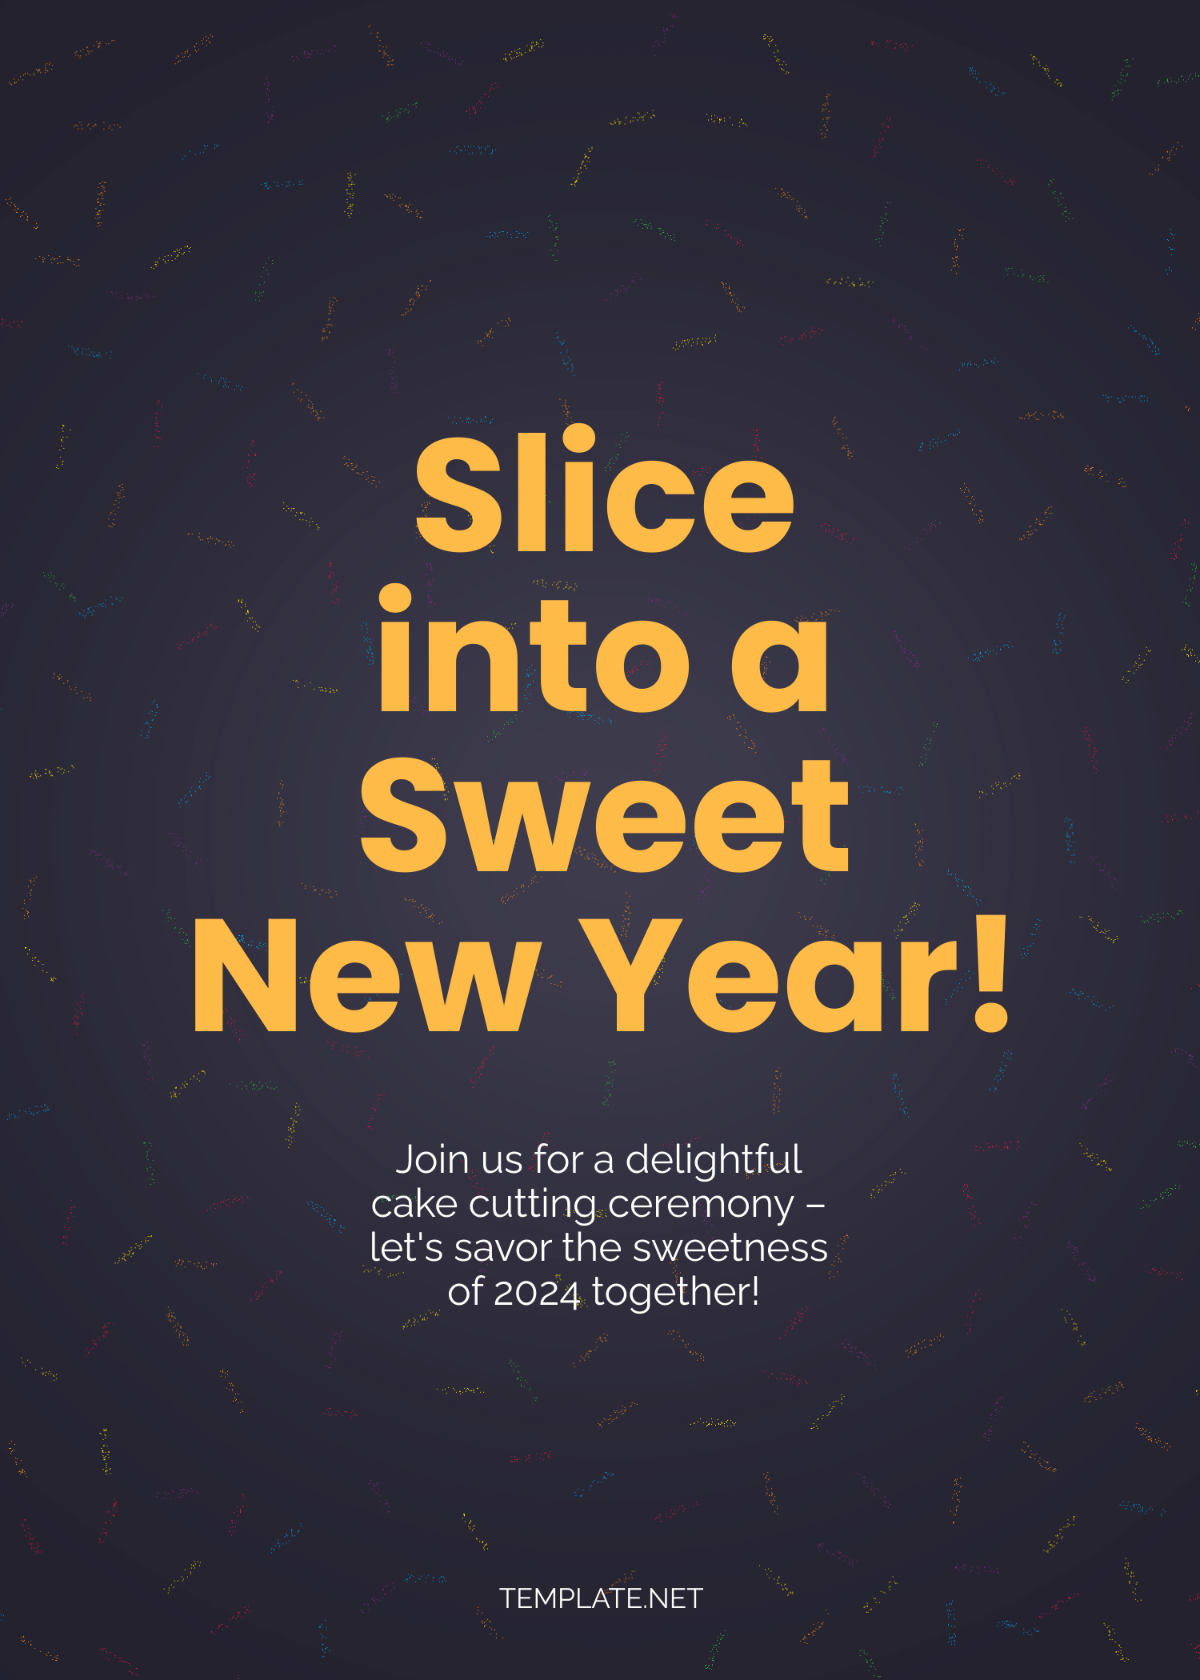 Free New Year Cake Cutting Invitation Template